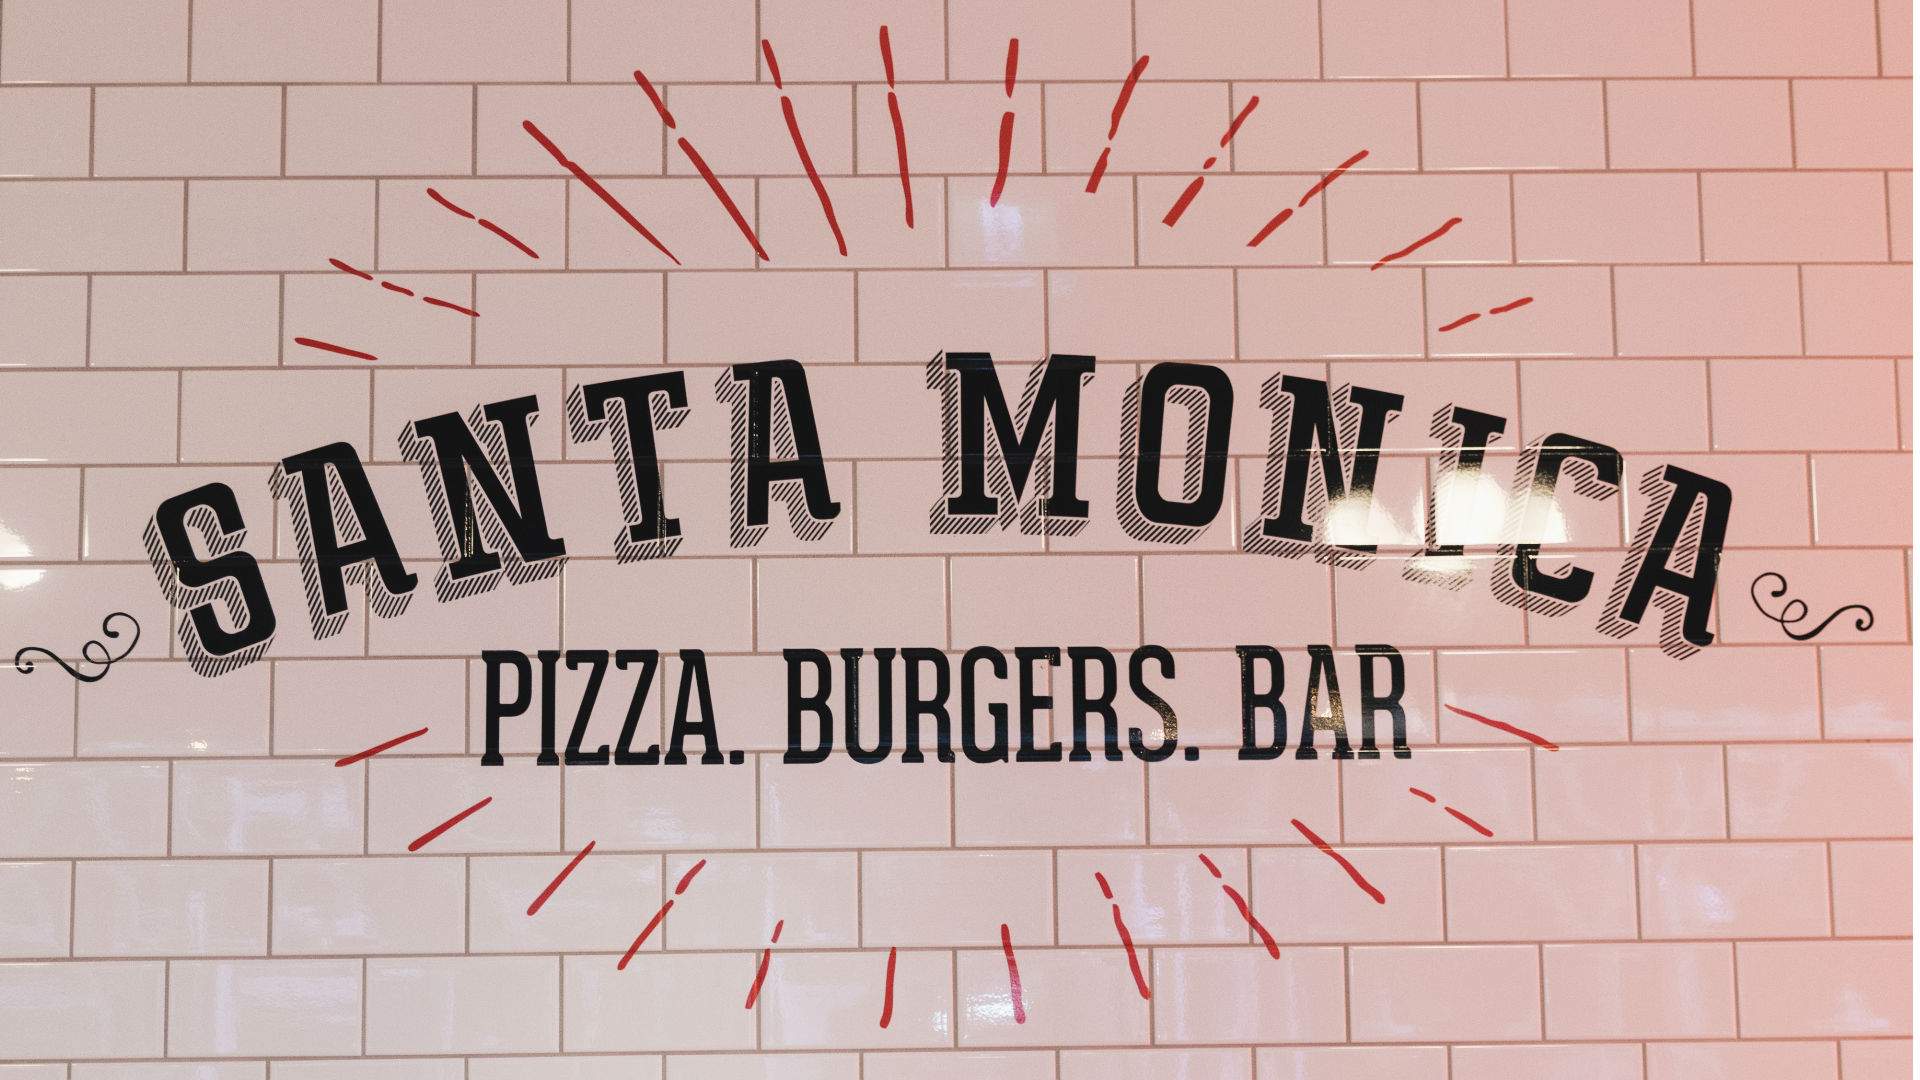 Santa Monica Pizza & Burger Bar